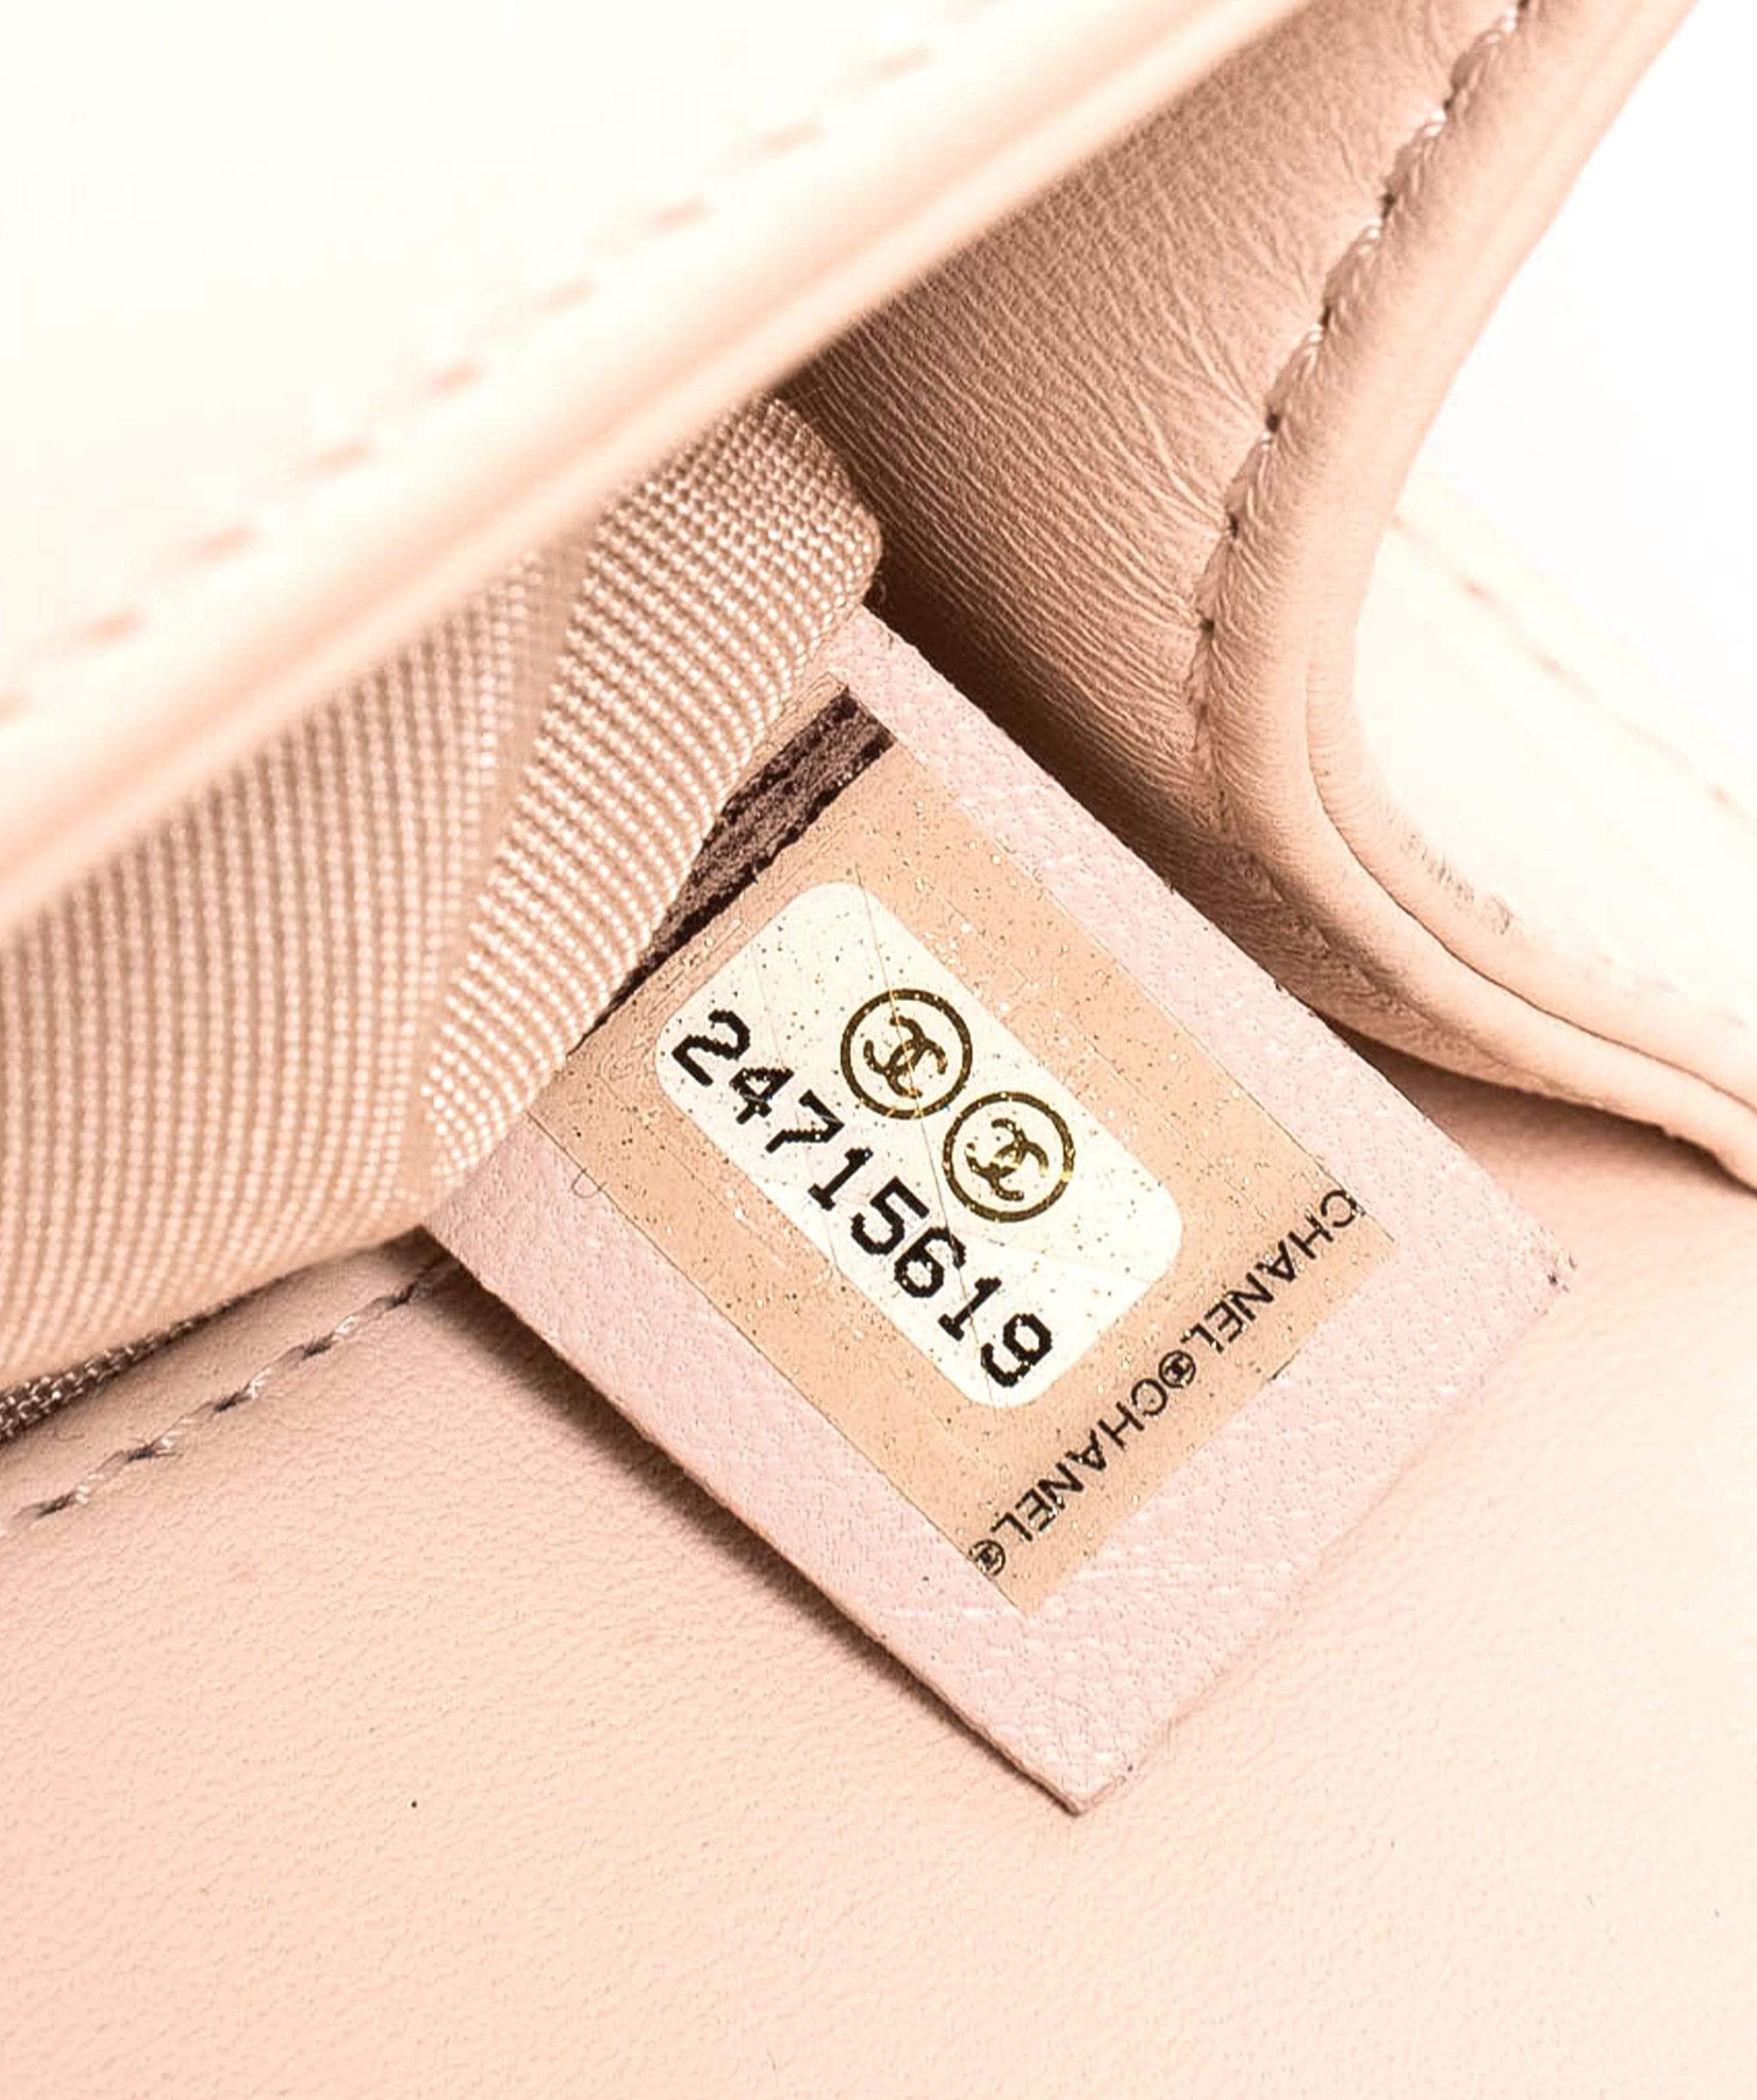 Chanel Chanel Le Boy Medium Bag Pink Beige with Silver Hardware - ASL1717